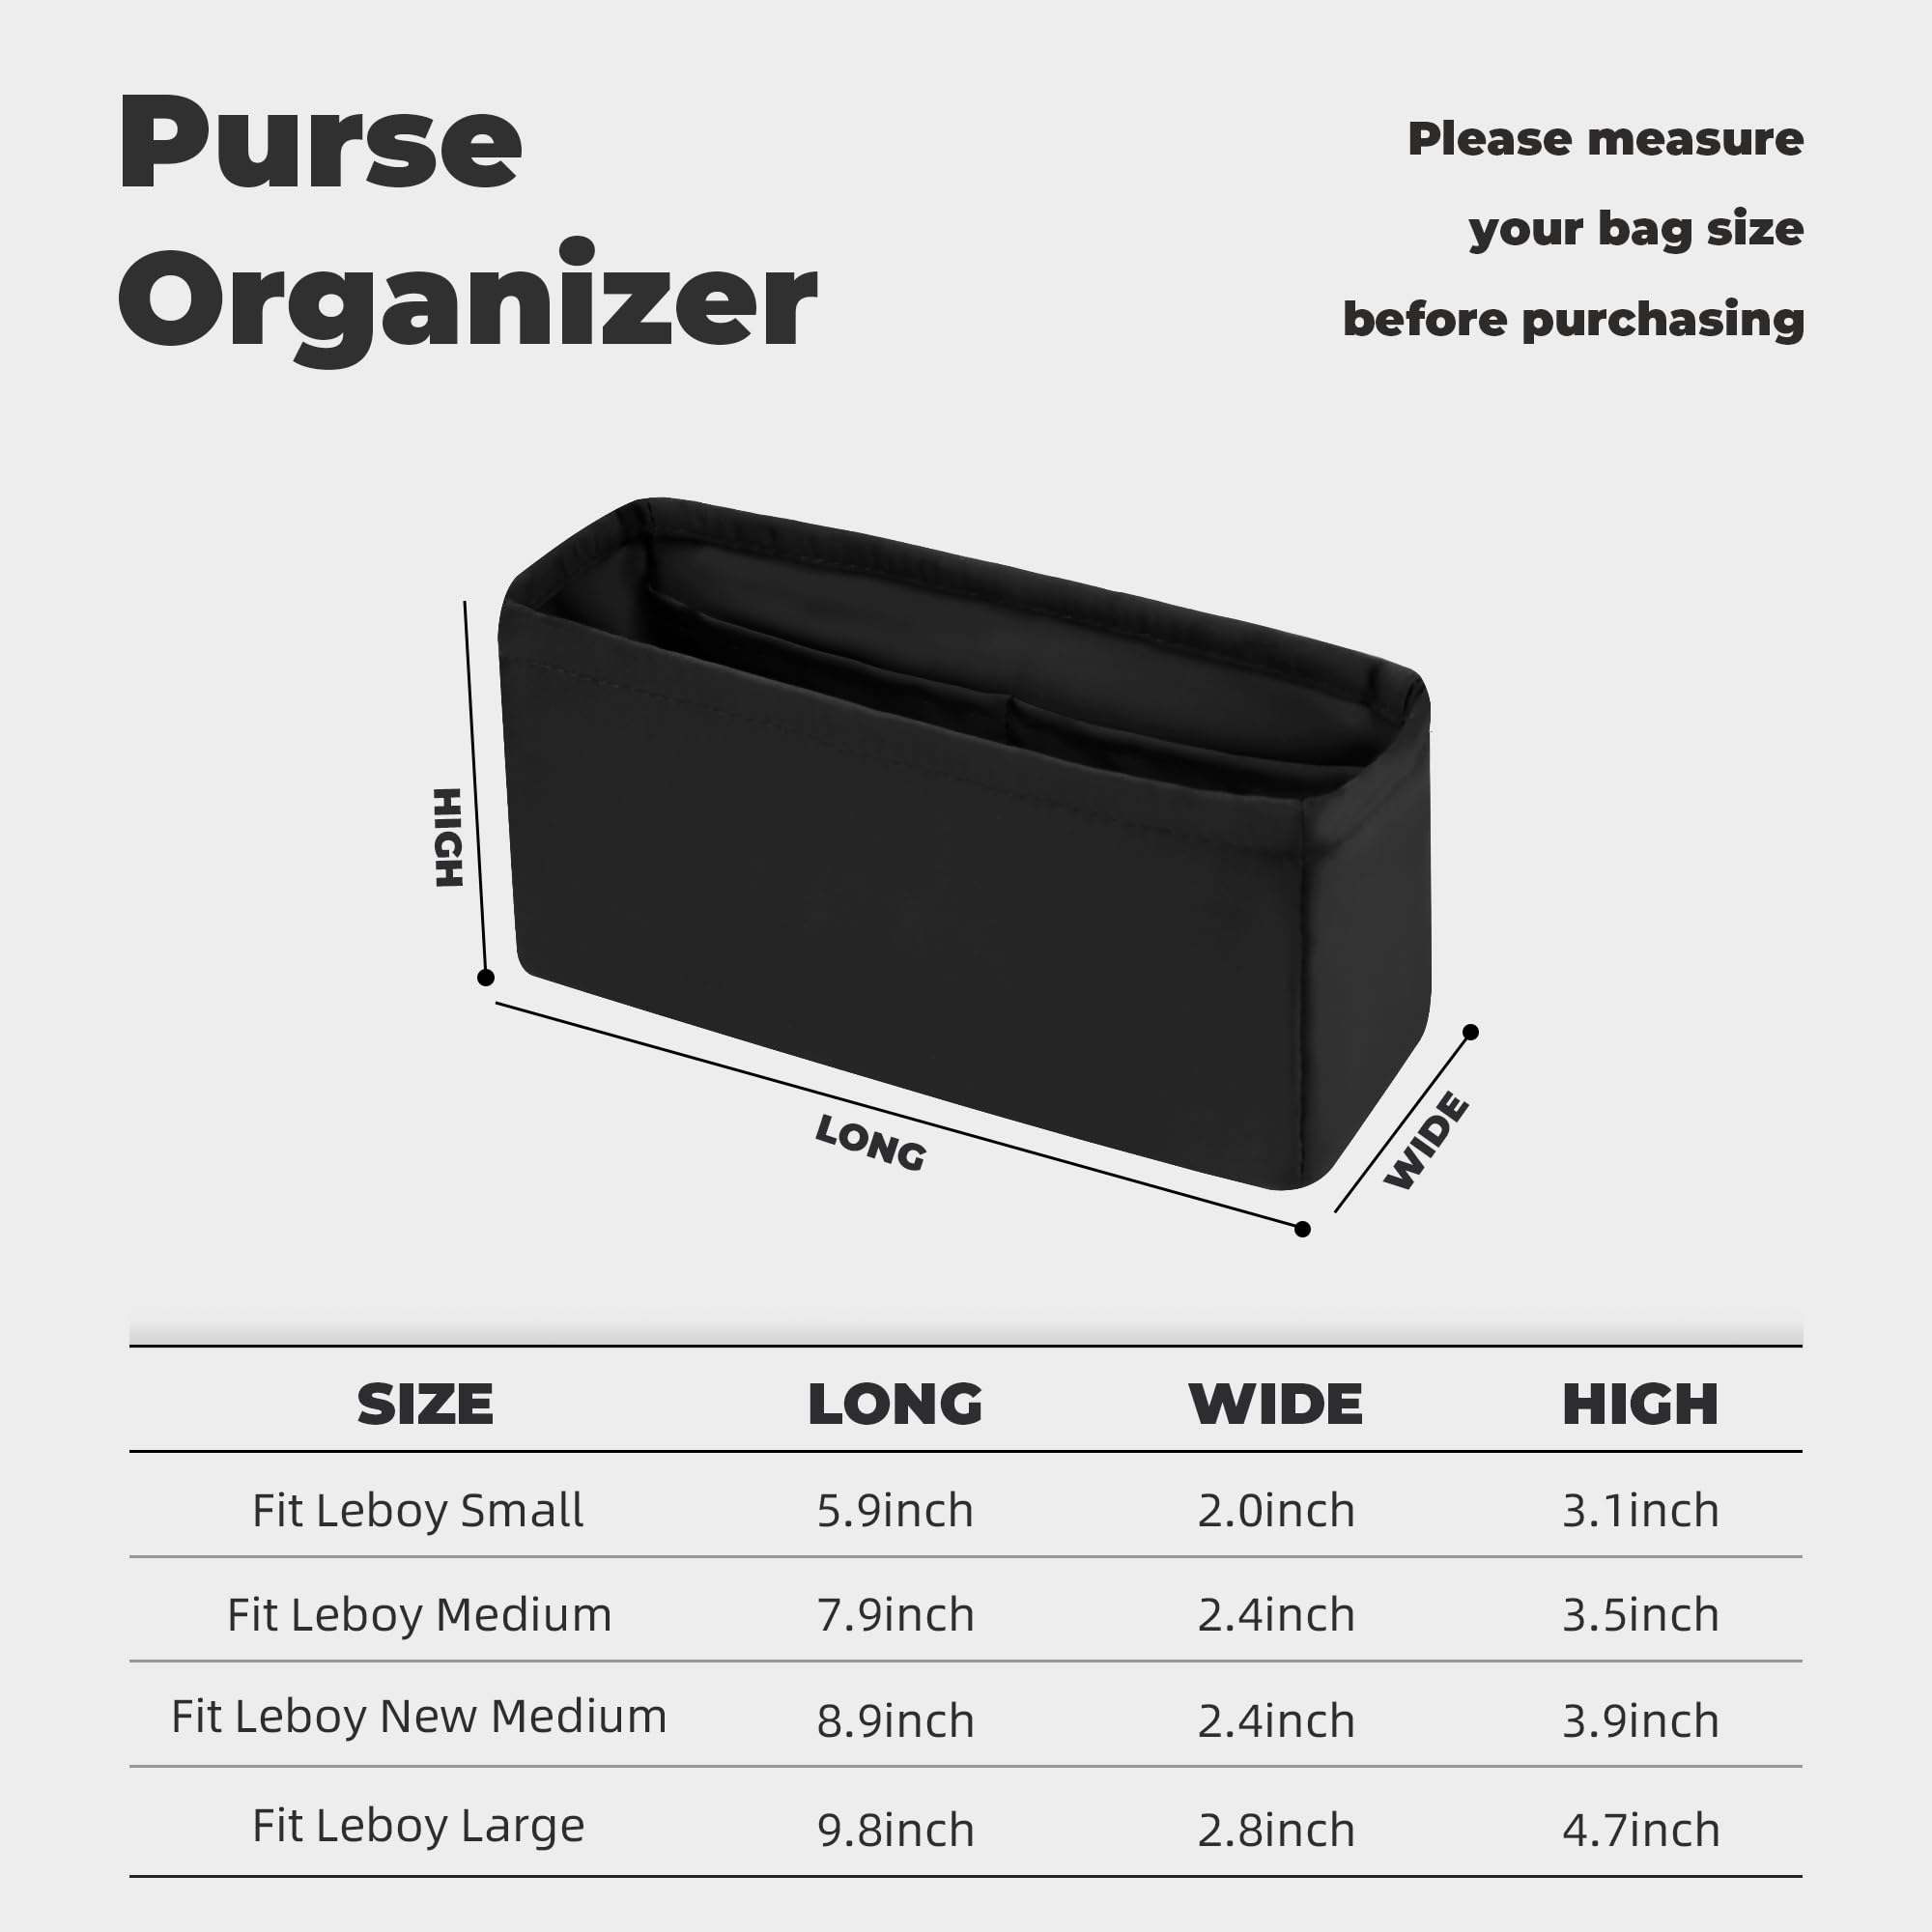 XYJG Purse Handbag Silky Organizer Insert Keep Bag Shape Fits LV Chanel Leboy Small/Medium/New Medium/Large Bags, Luxury Handbag Tote Lightweight Sturdy(Small 20,Black)